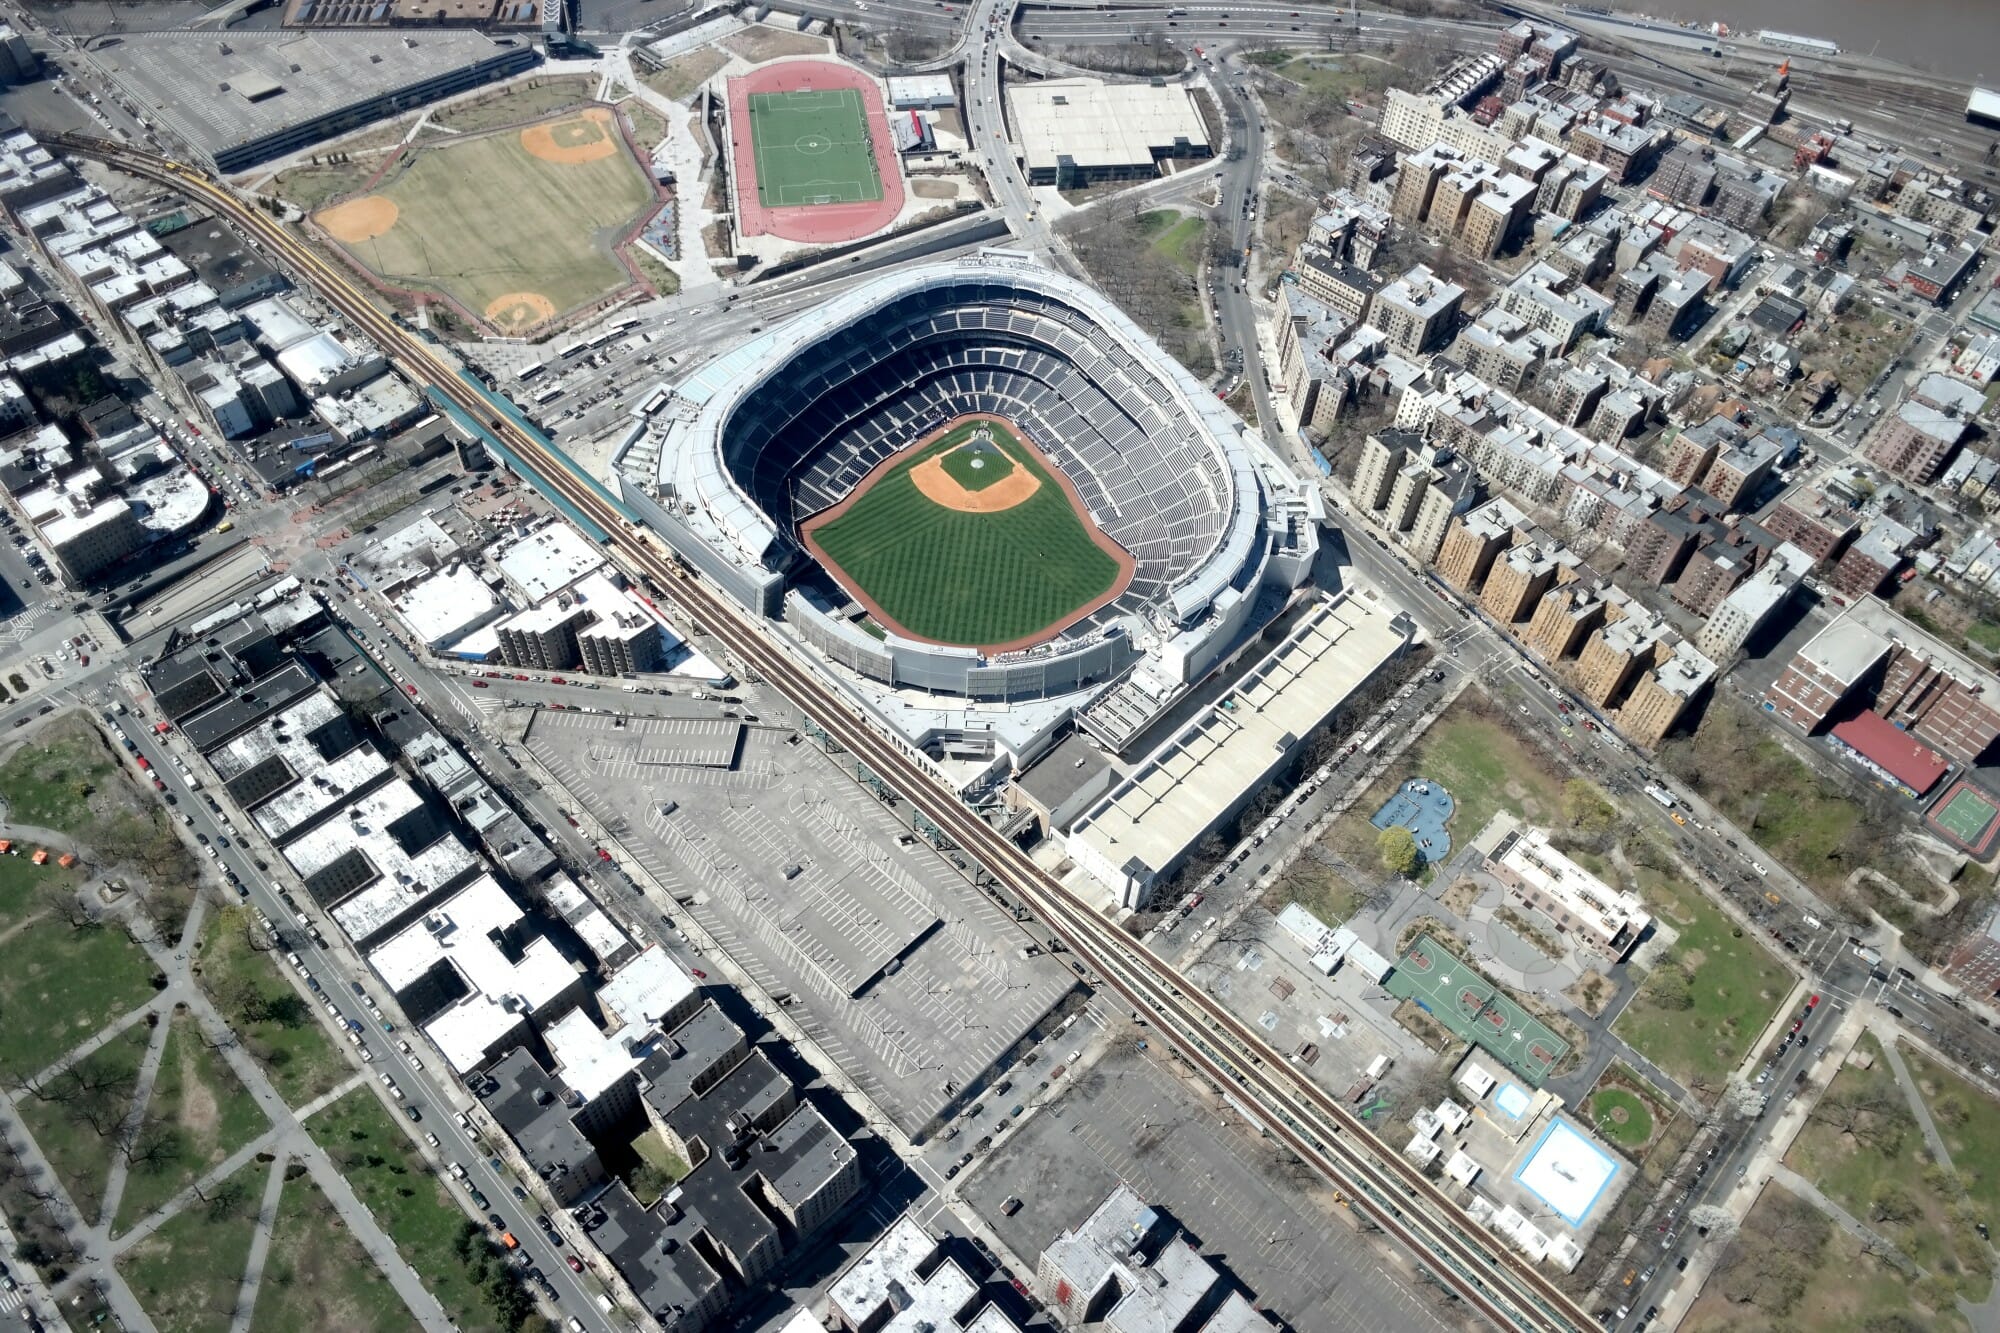 The Ultimate Secret for Stress-Free Yankee Stadium Parking (Hint: It's ParkMobile!)